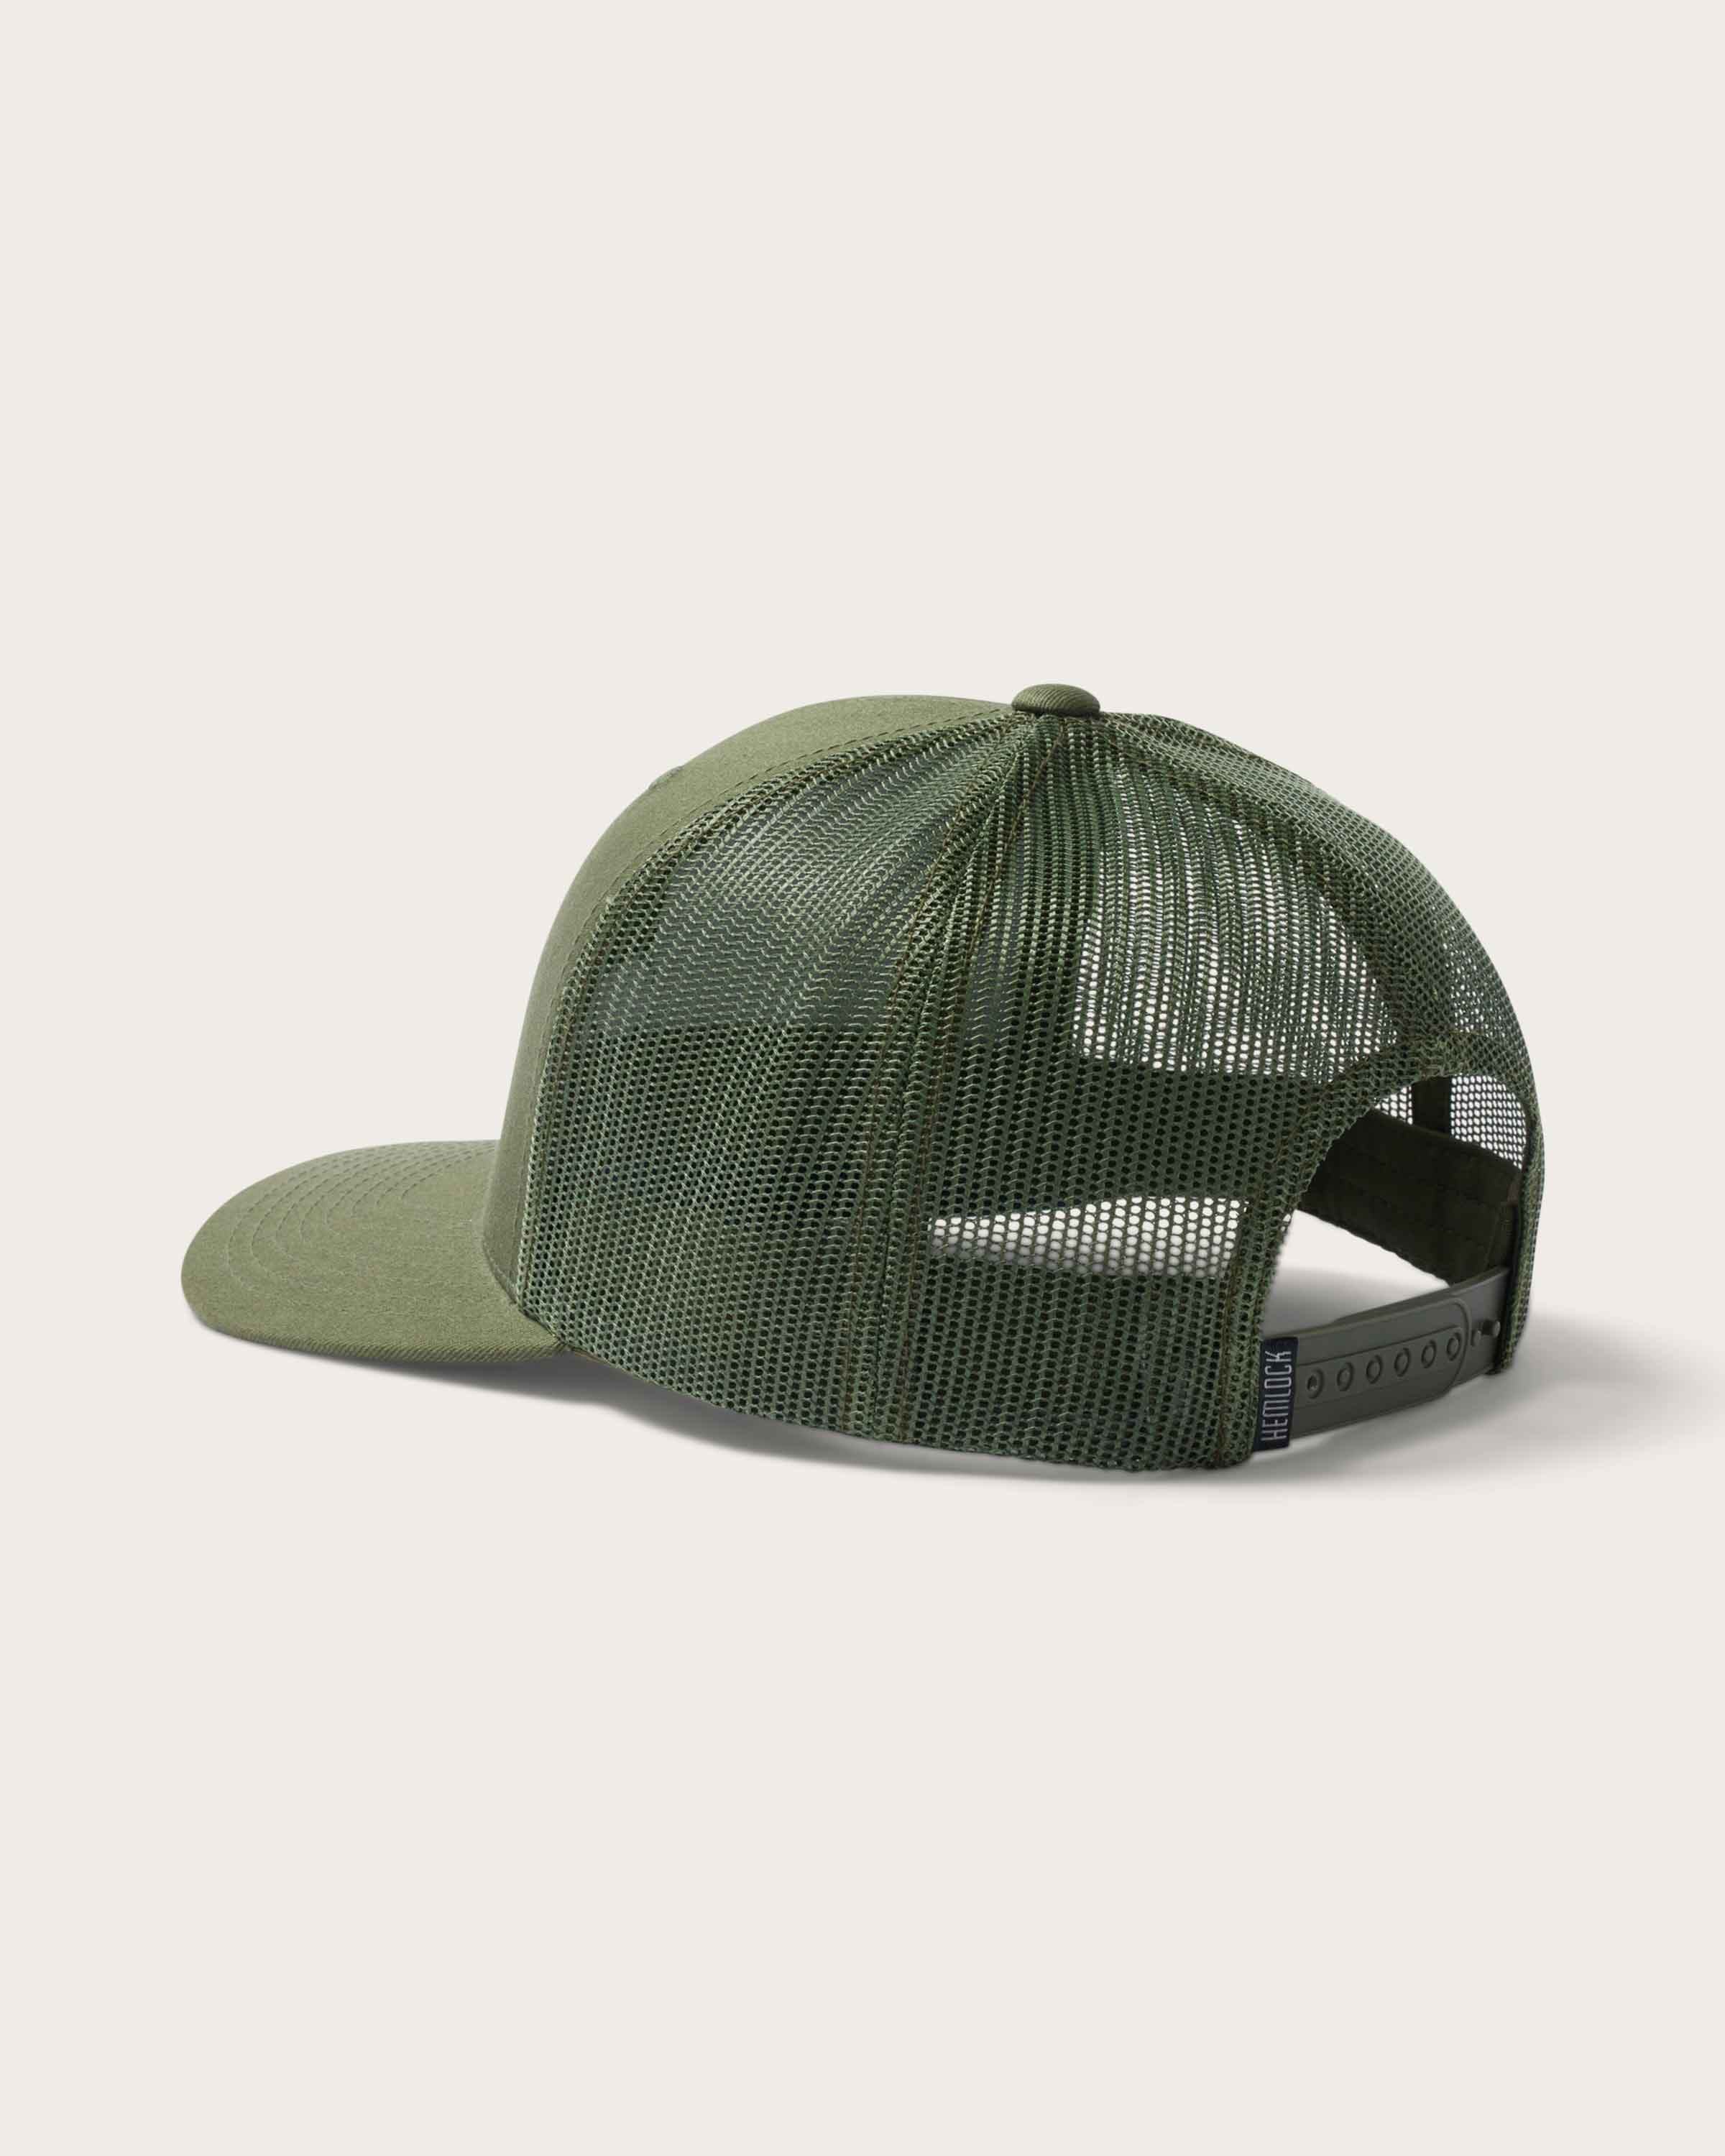 Cooper Trucker Hat in Olive - undefined - Hemlock Hat Co. Ball Caps